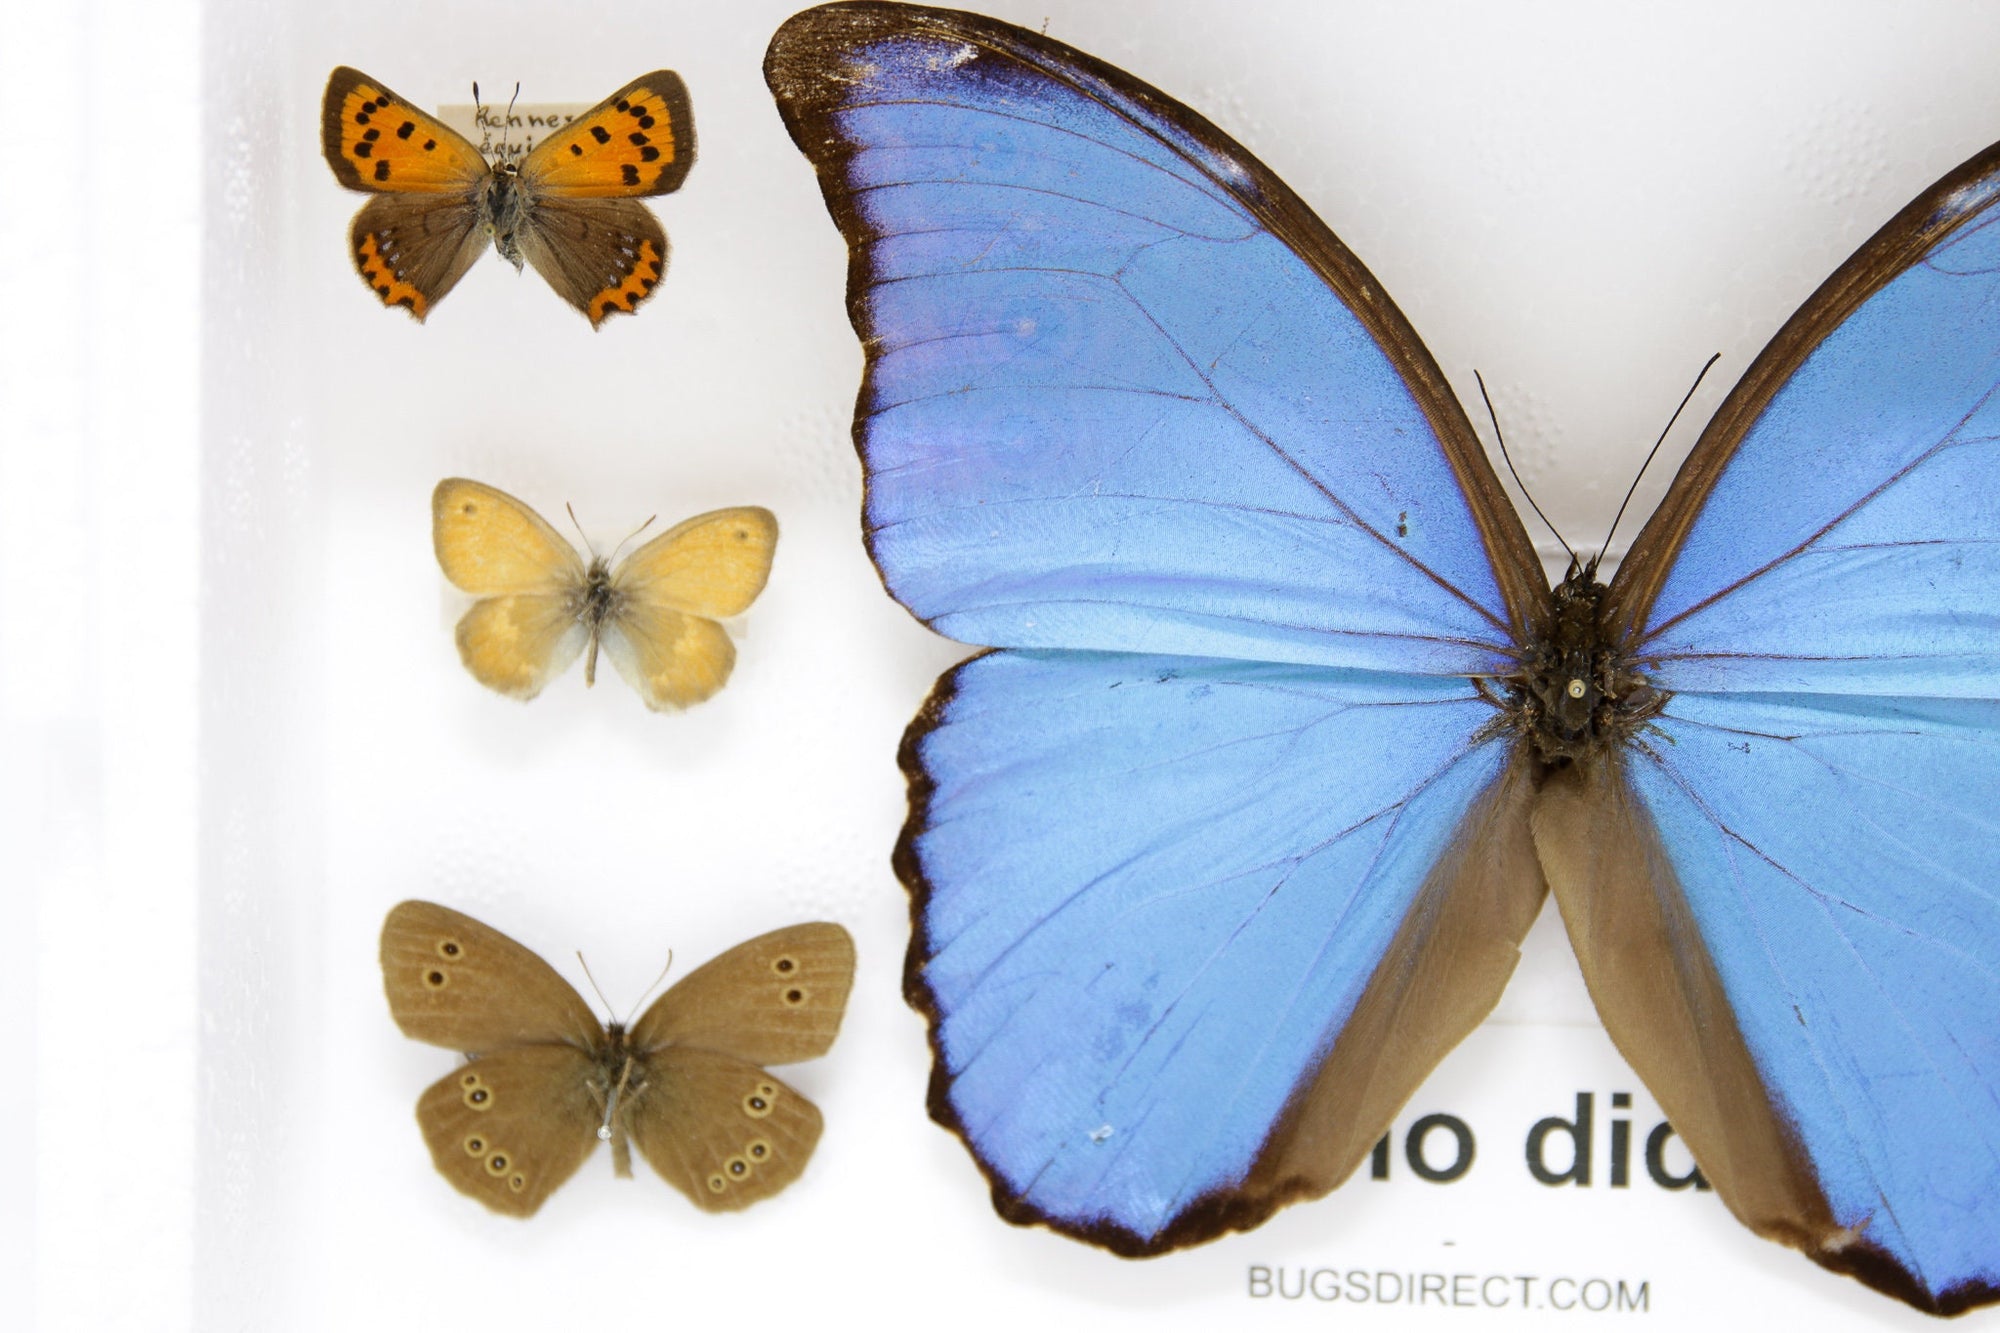 Blue Morpho & Assorted Butterflies, A1 Quality, Entomology, Real Lepidoptera Specimens #SE54